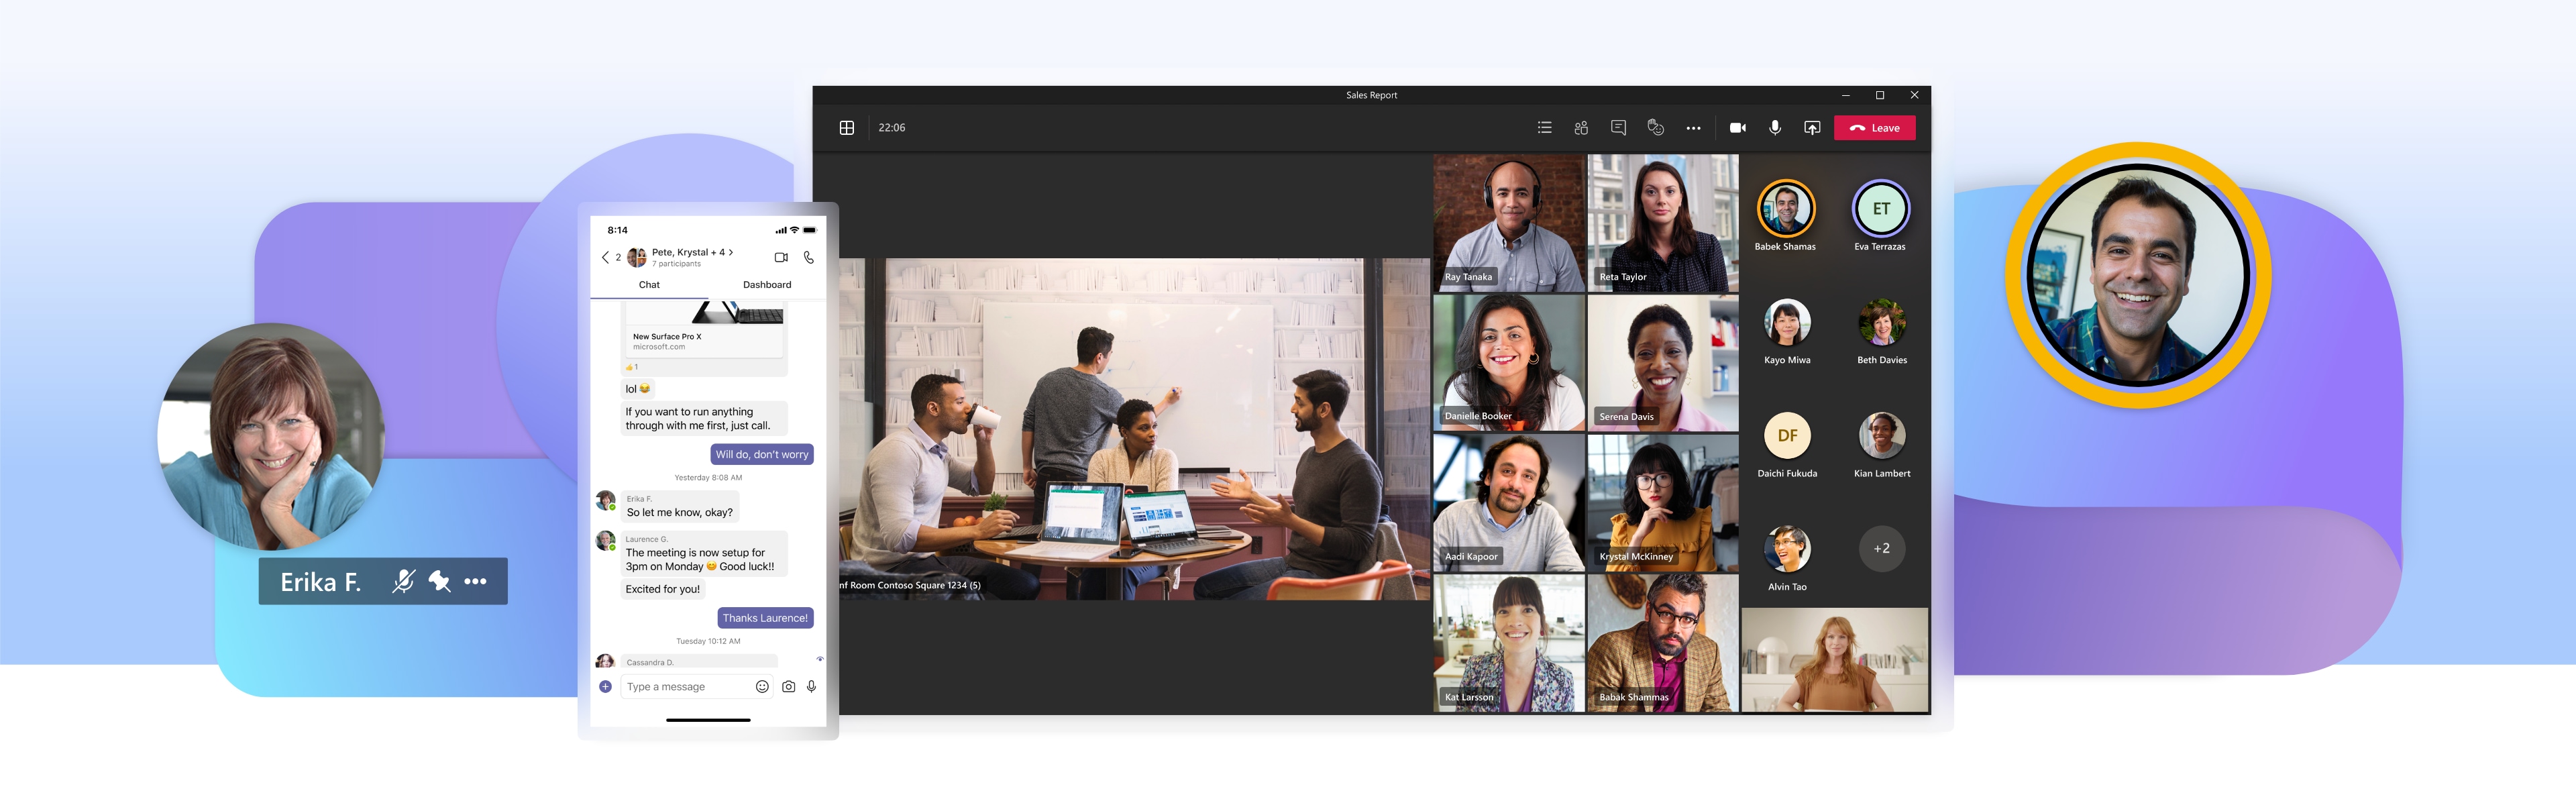 Microsoft Teams for Work | Collaborate in Online Meetings